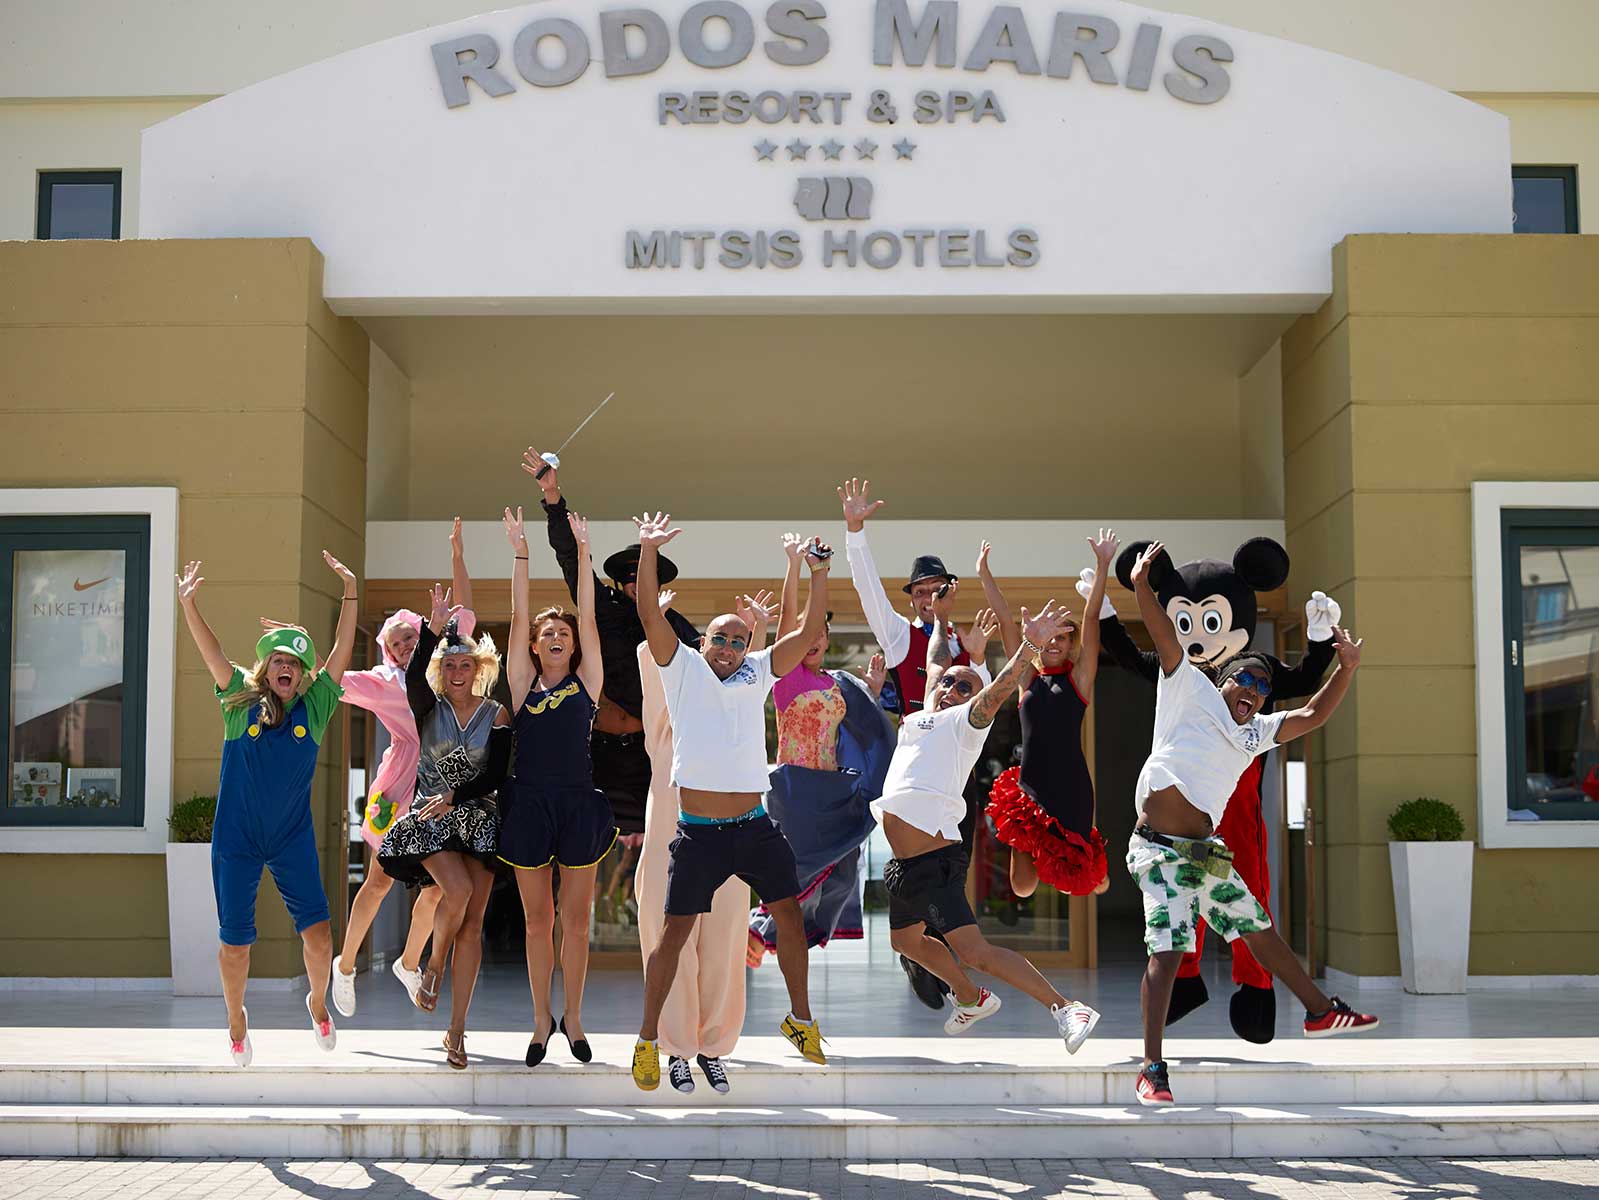 Mitsis Rodos Maris Resort & Spa: Sports and Entertainment